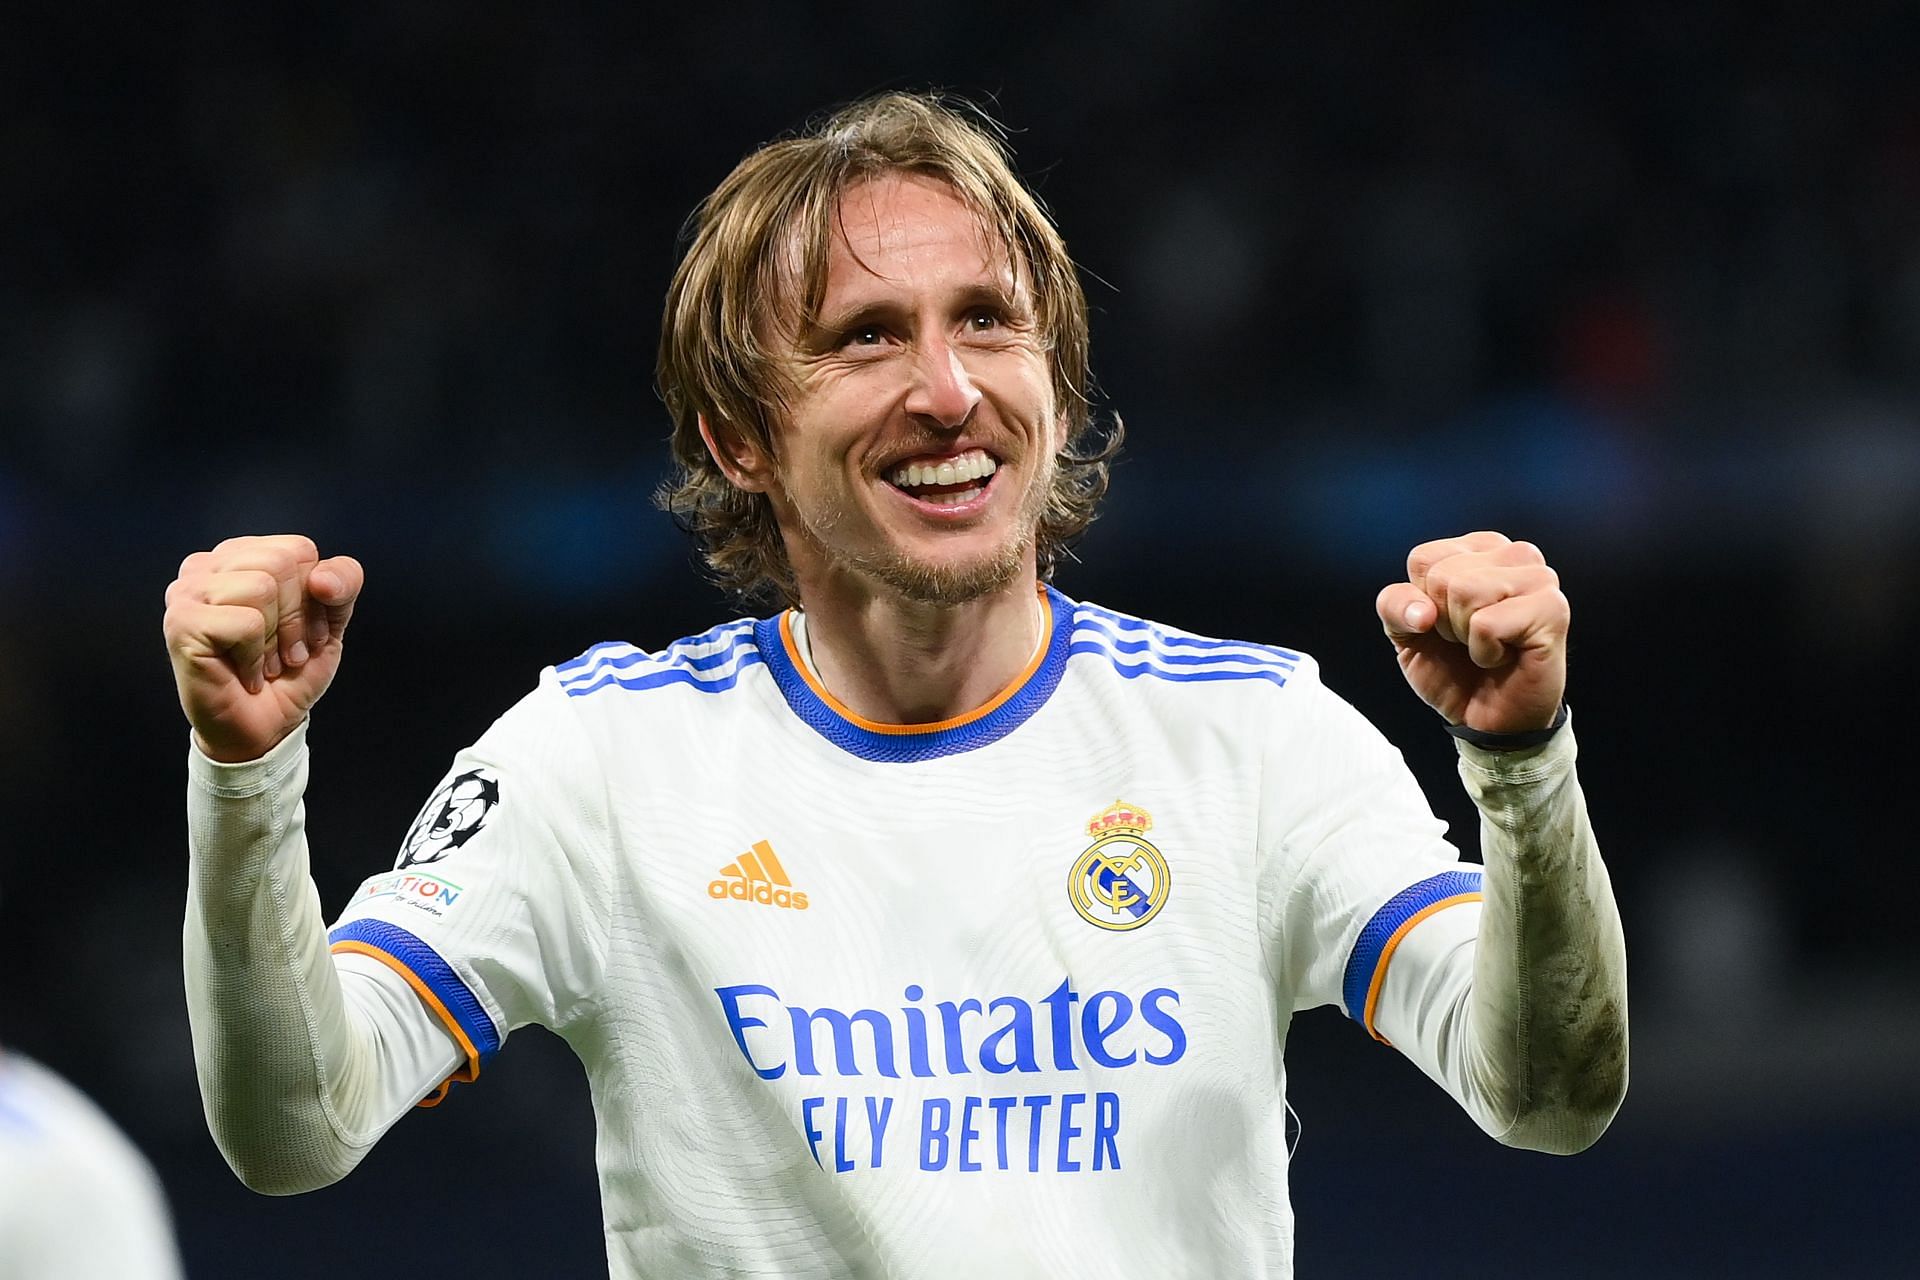 Luka Modric produced a stunning trivela assist